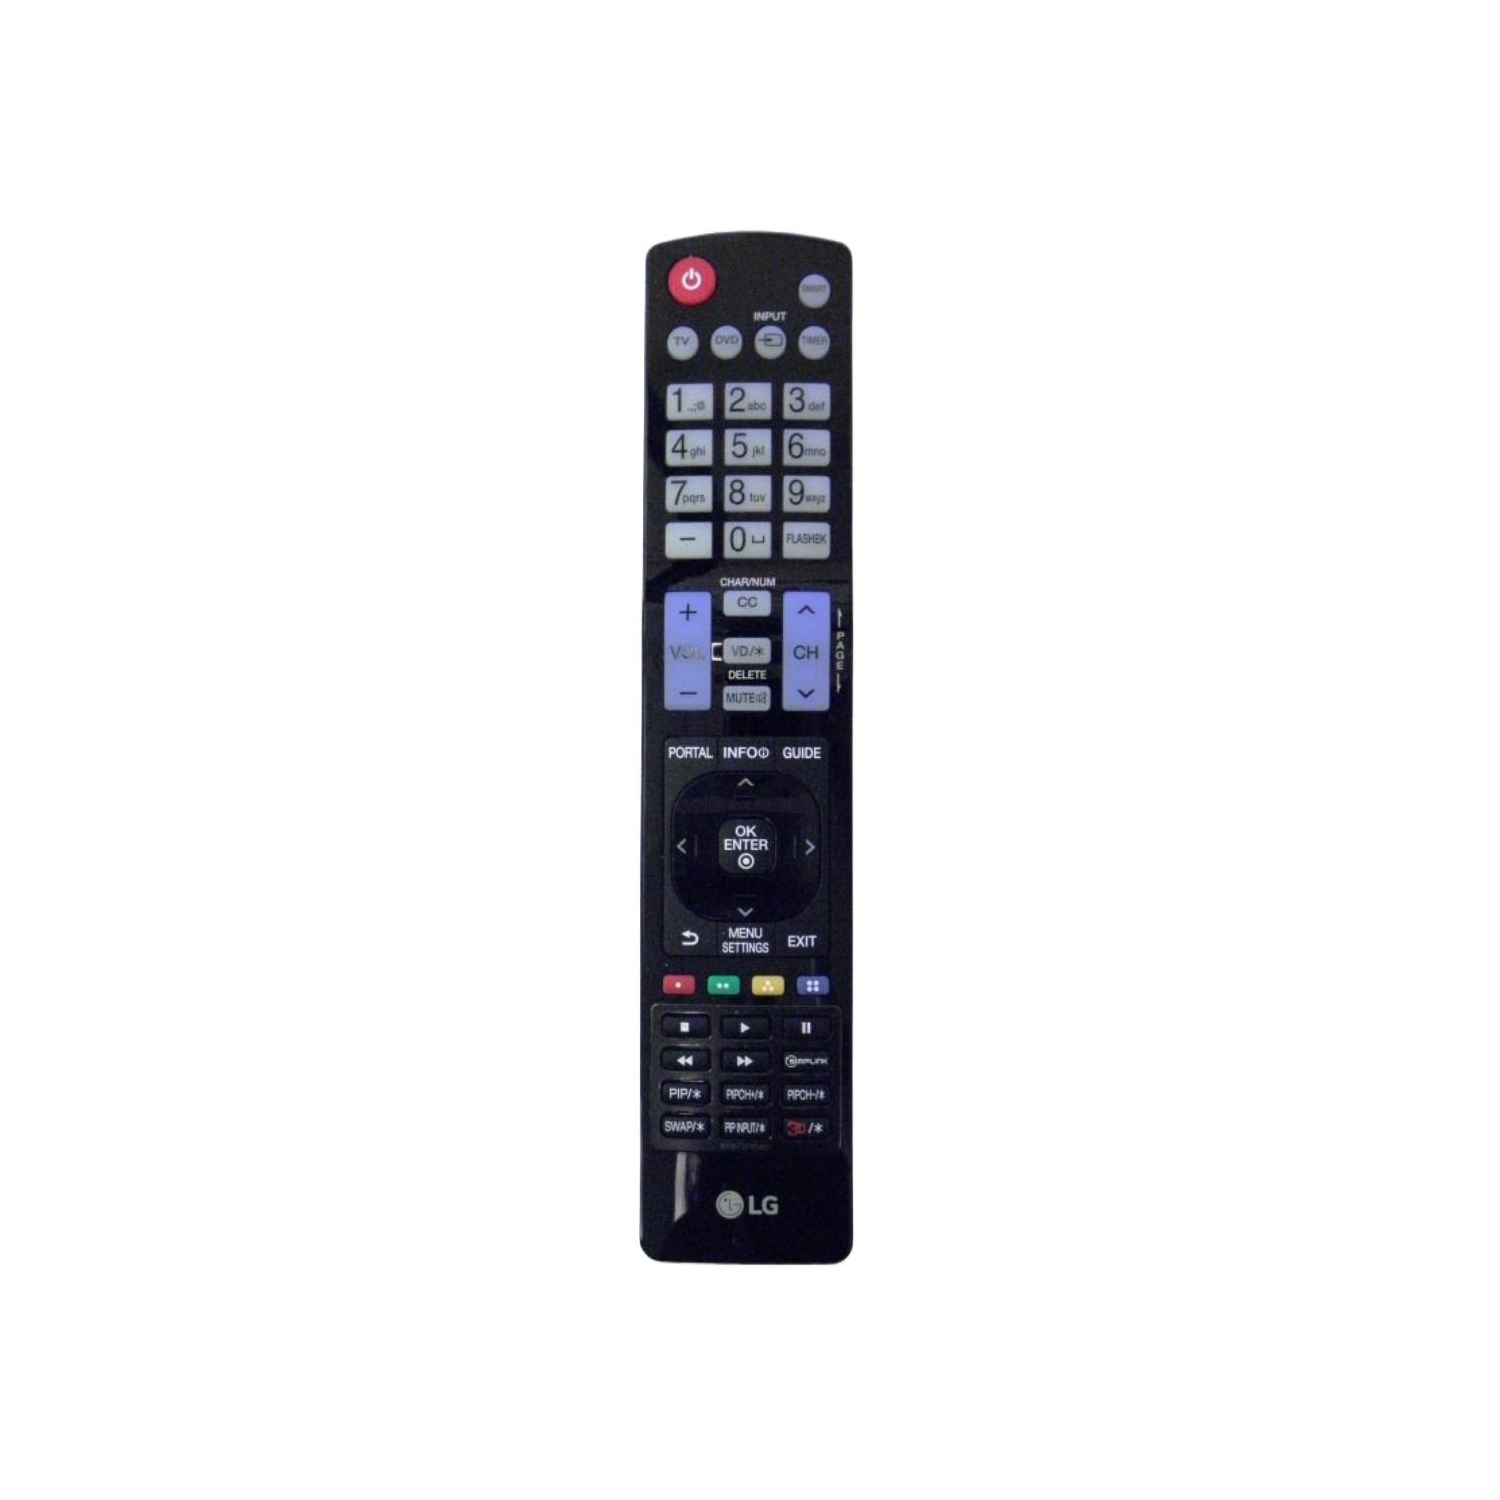 Refurbished (Good) LG TV Remote Control AKB76037102